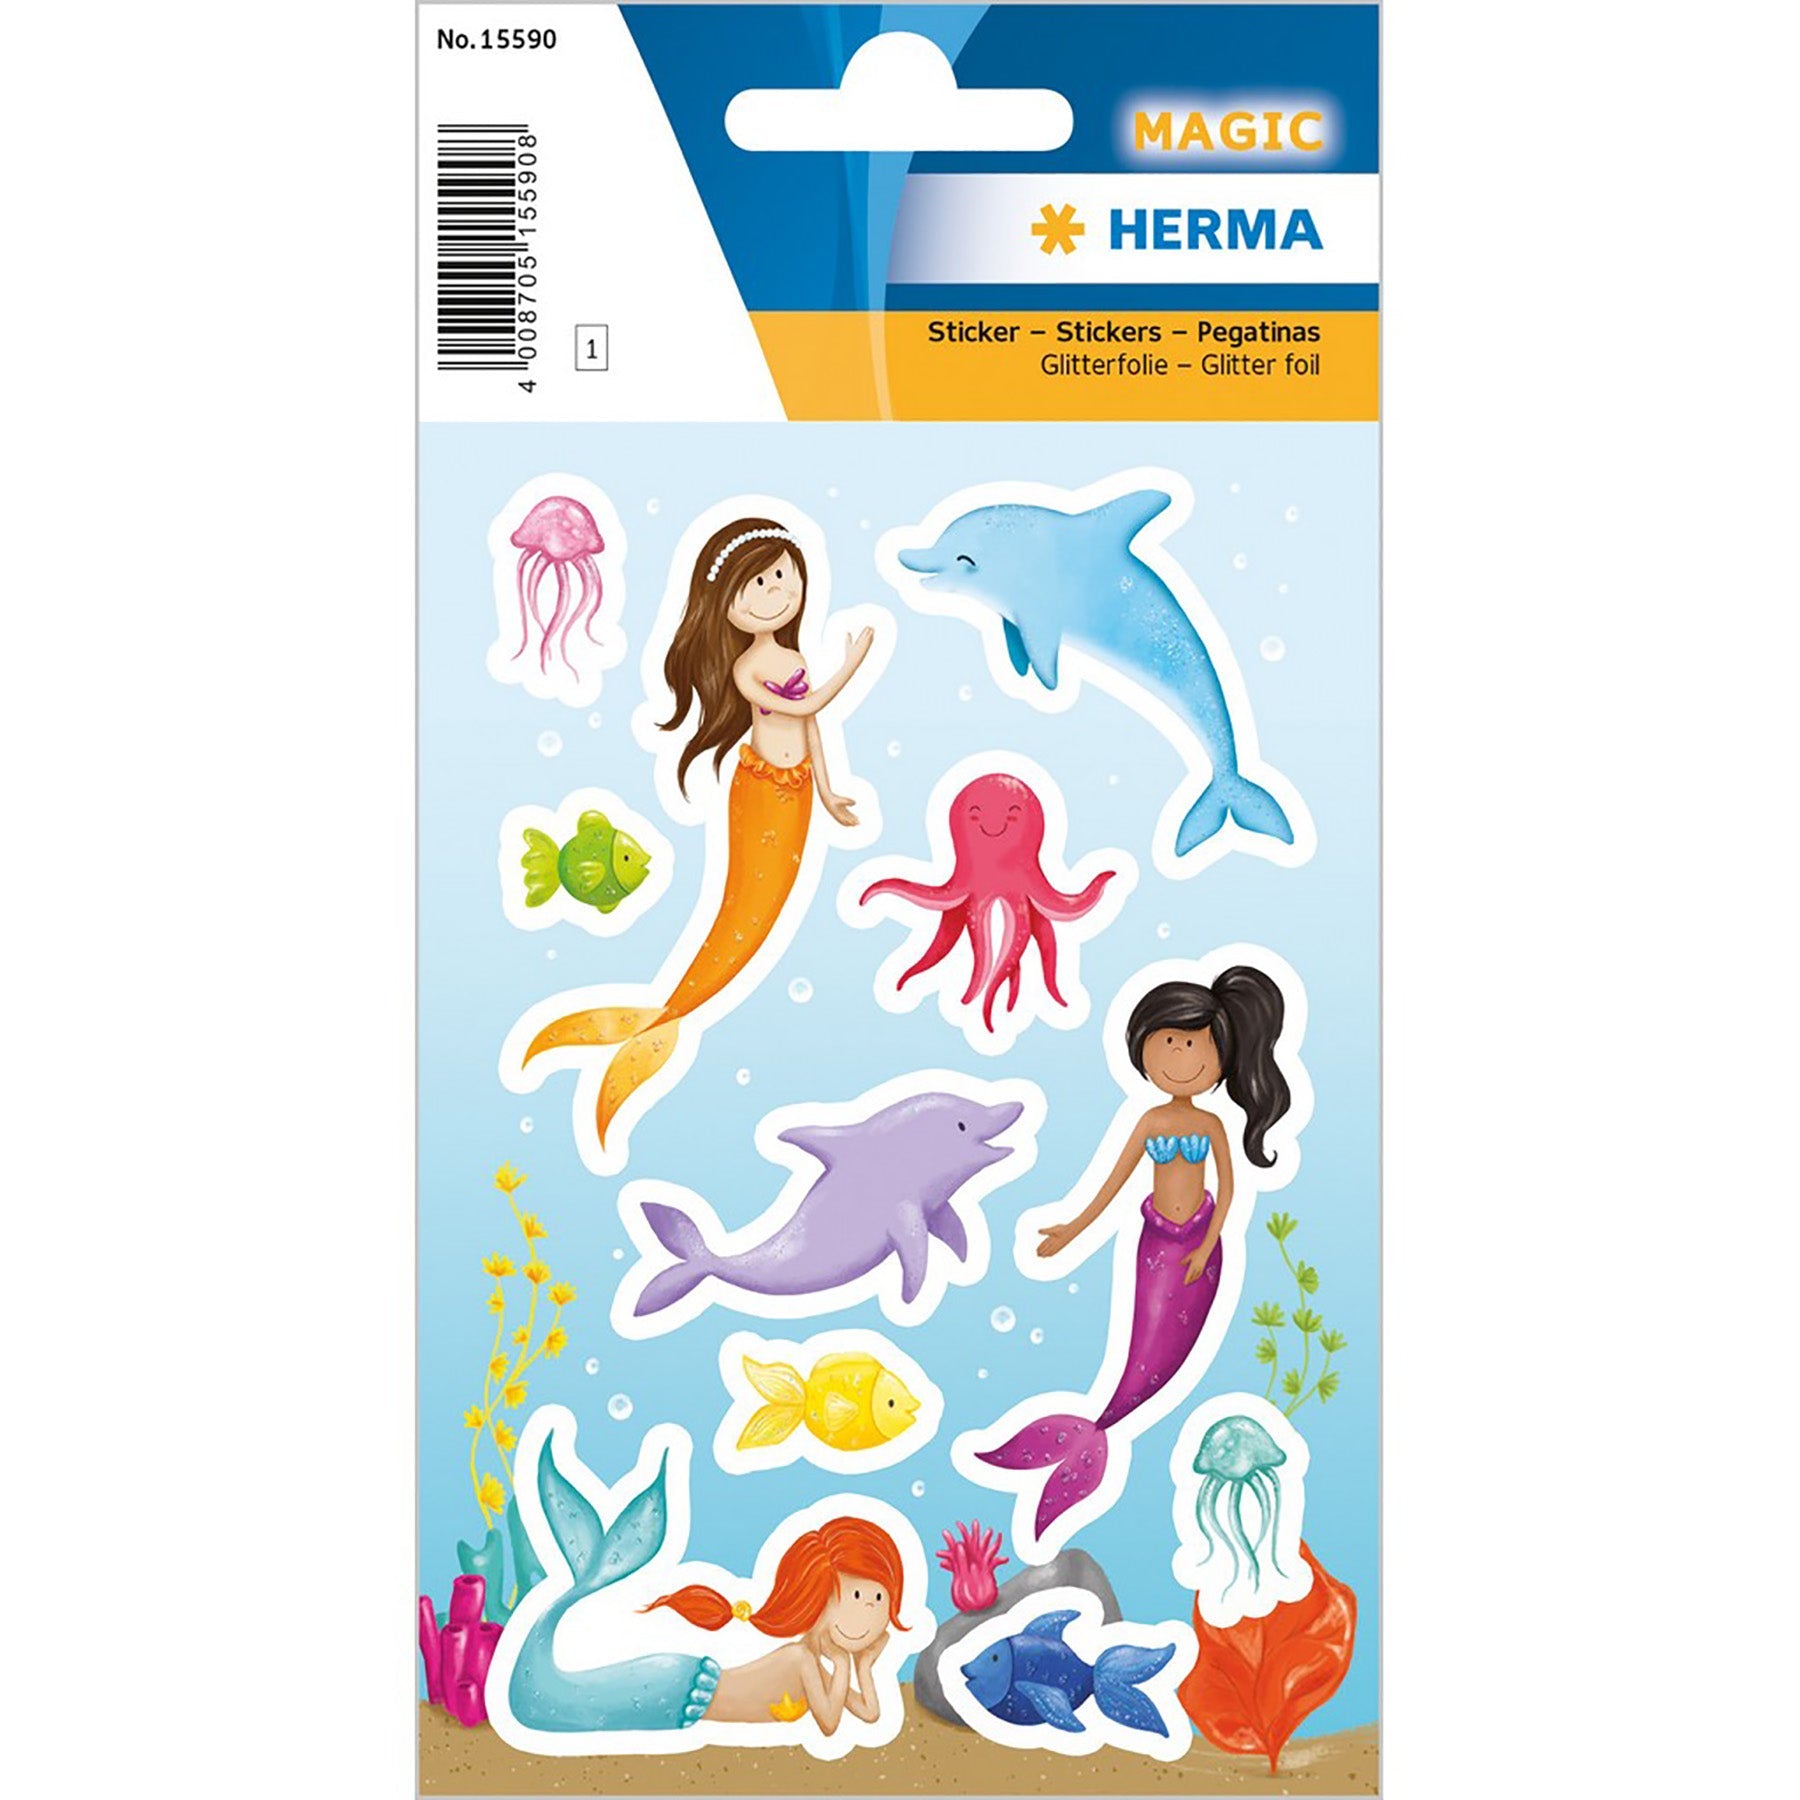 Herma Magic Stickers Princess of the Sea Glitter Foil 4.75x3.1in Sheet